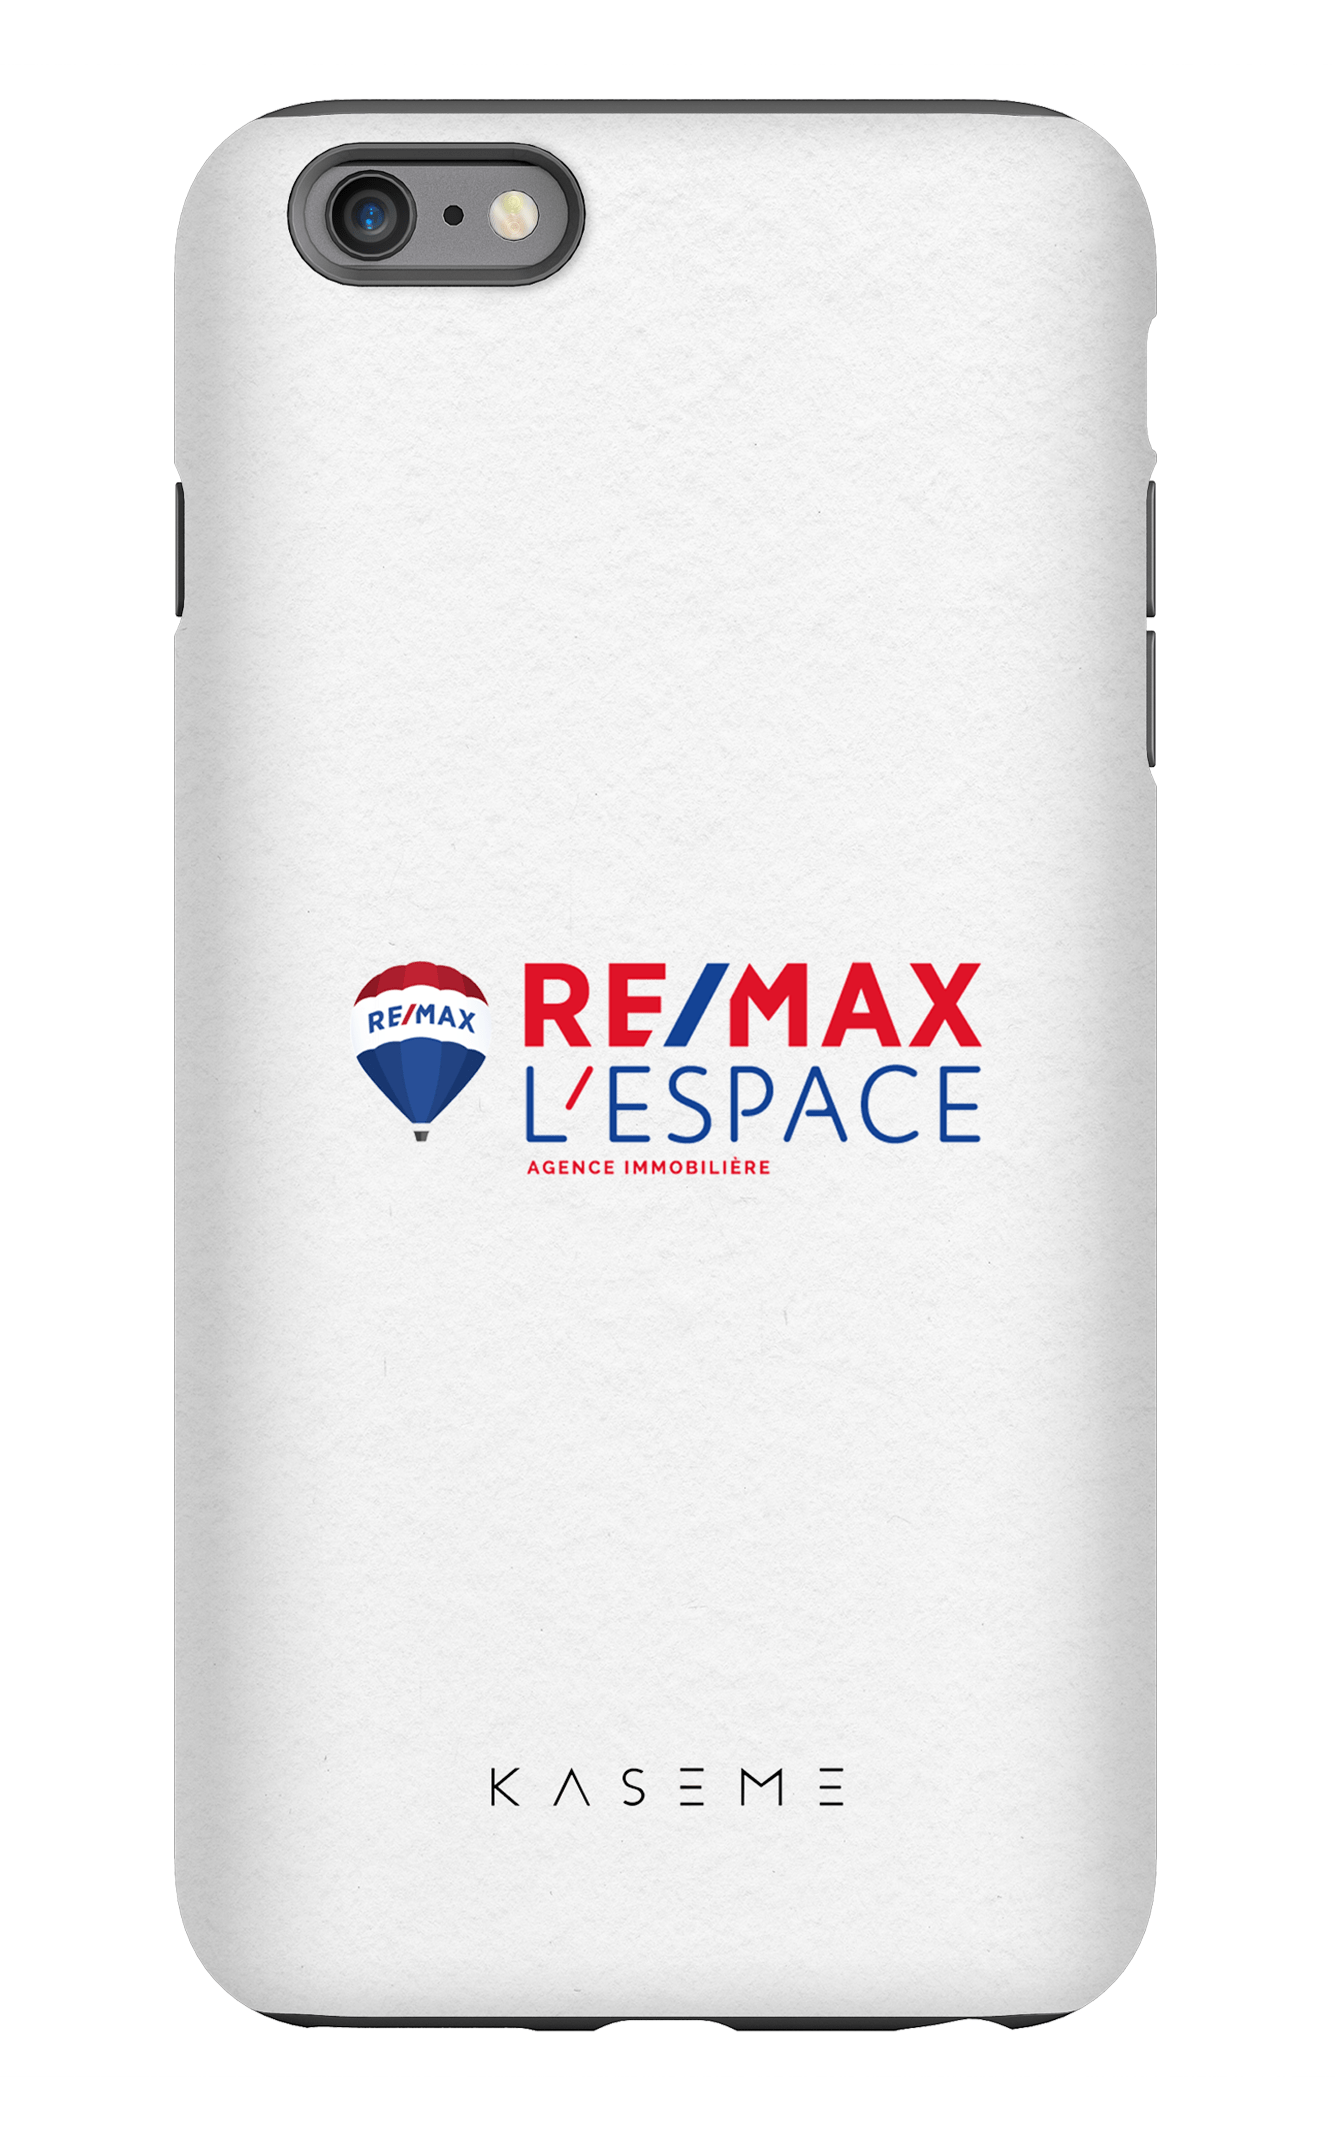 Remax L'Espace Blanc - iPhone 6/6s Plus